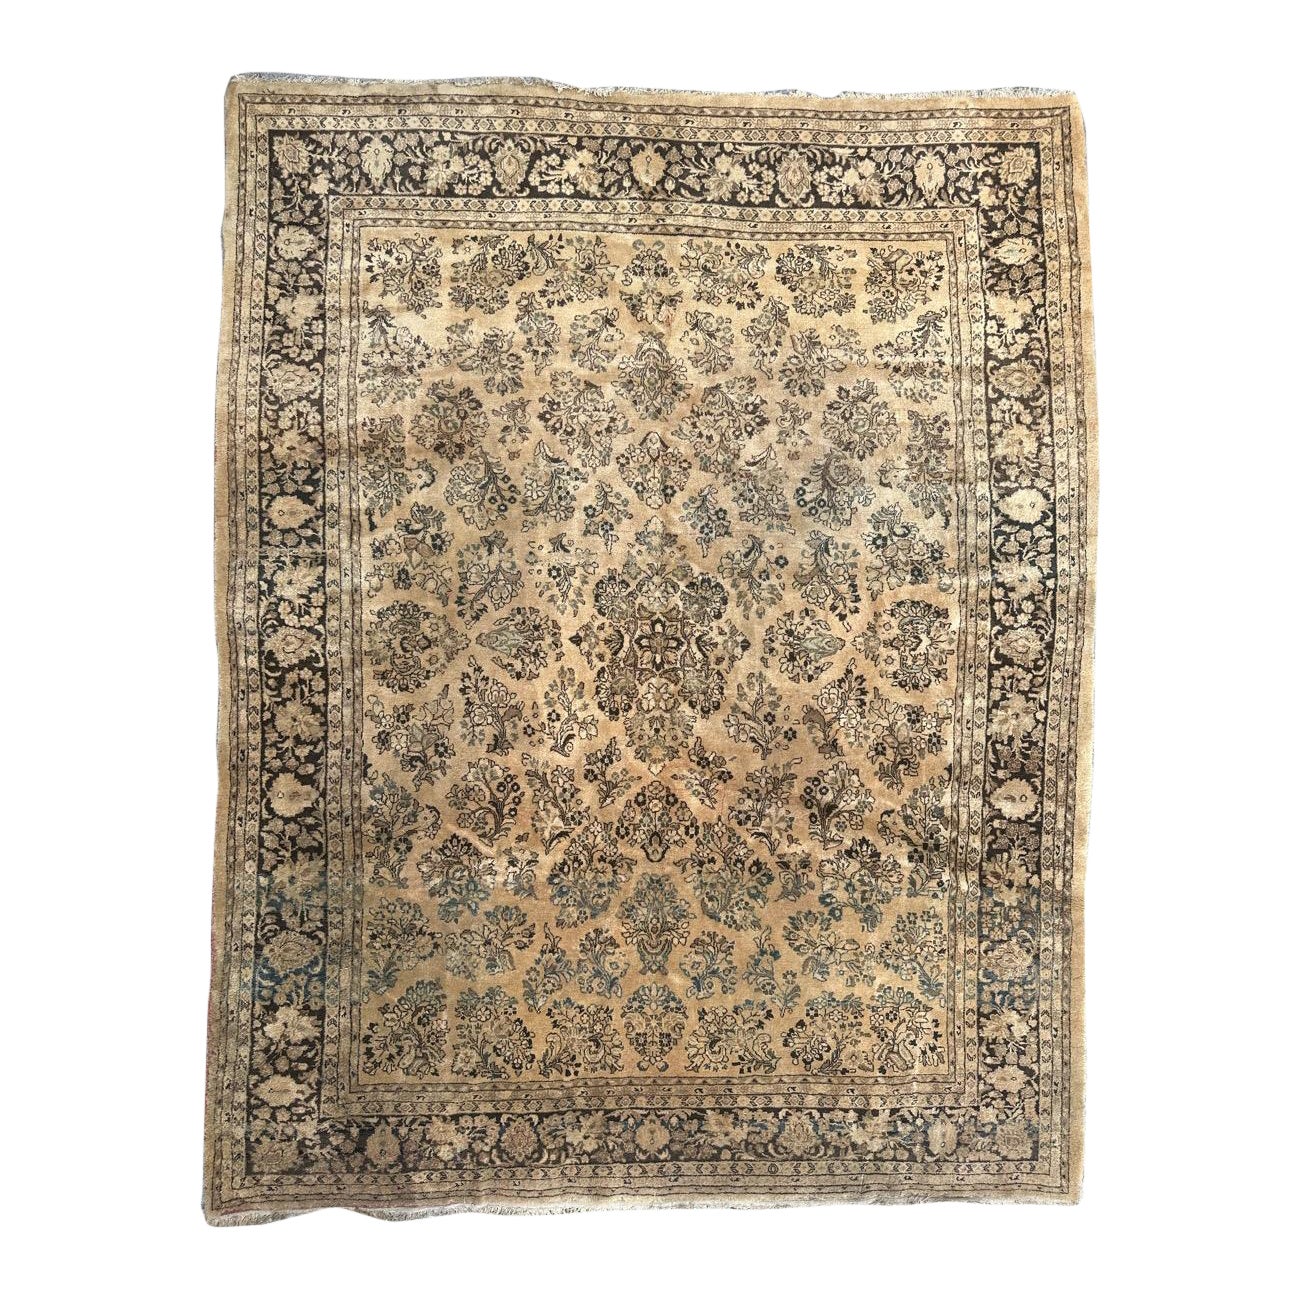 Bobyrug’s Pretty large antique yazd rug 